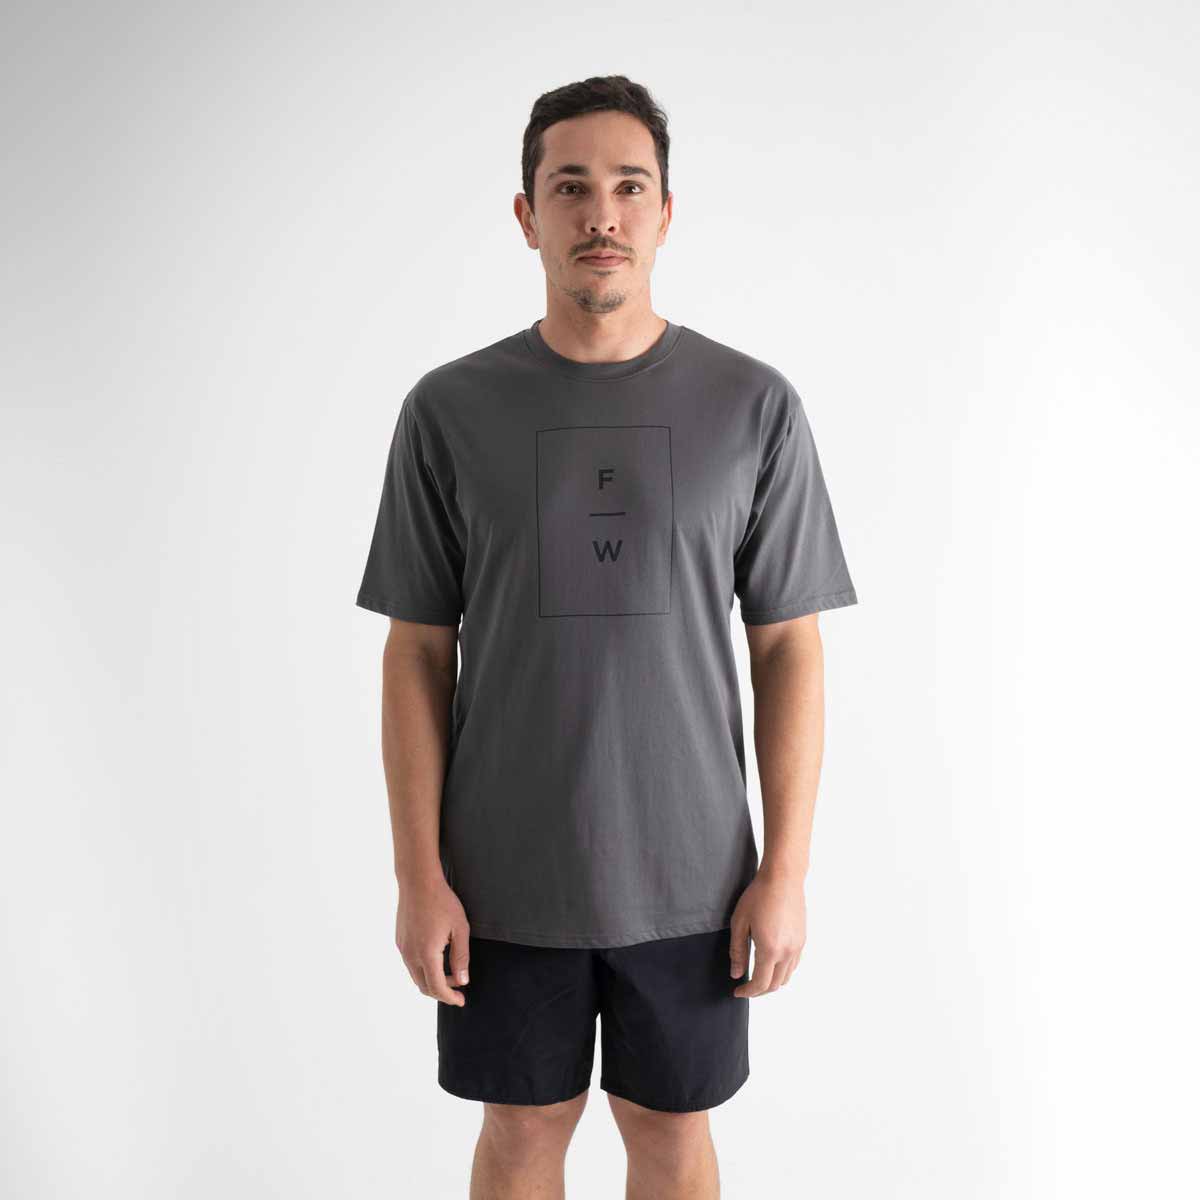 Follow FW Mens T-krekls – Ogļu pelēks